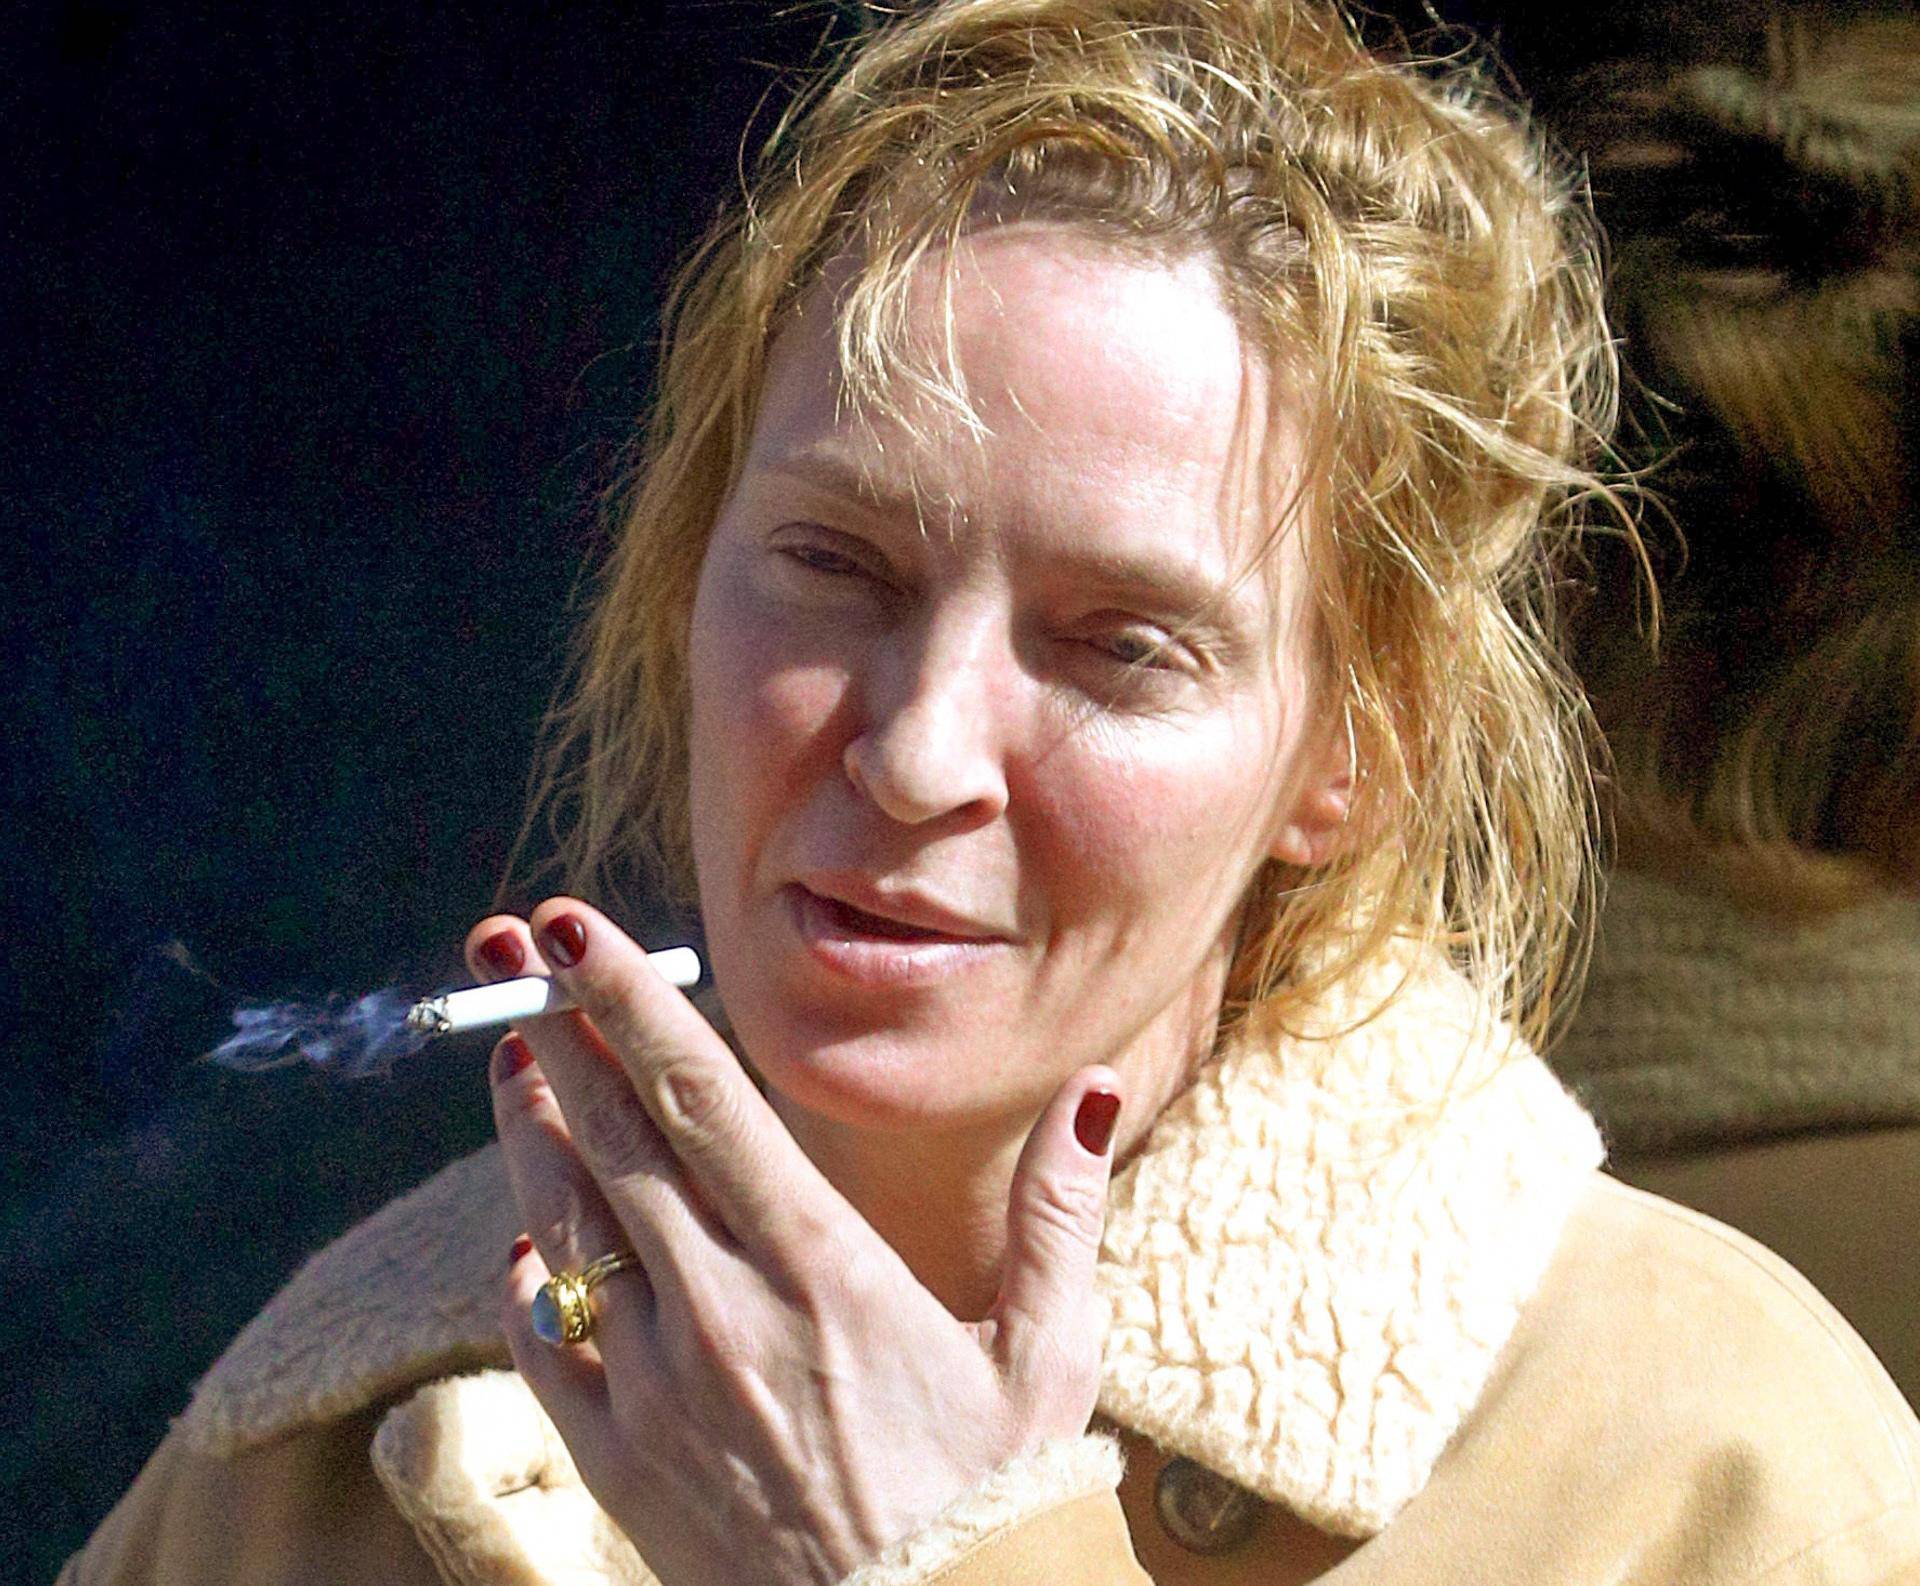 *EXCLUSIVE* Uma Thurman looks run down smoking cigarettes